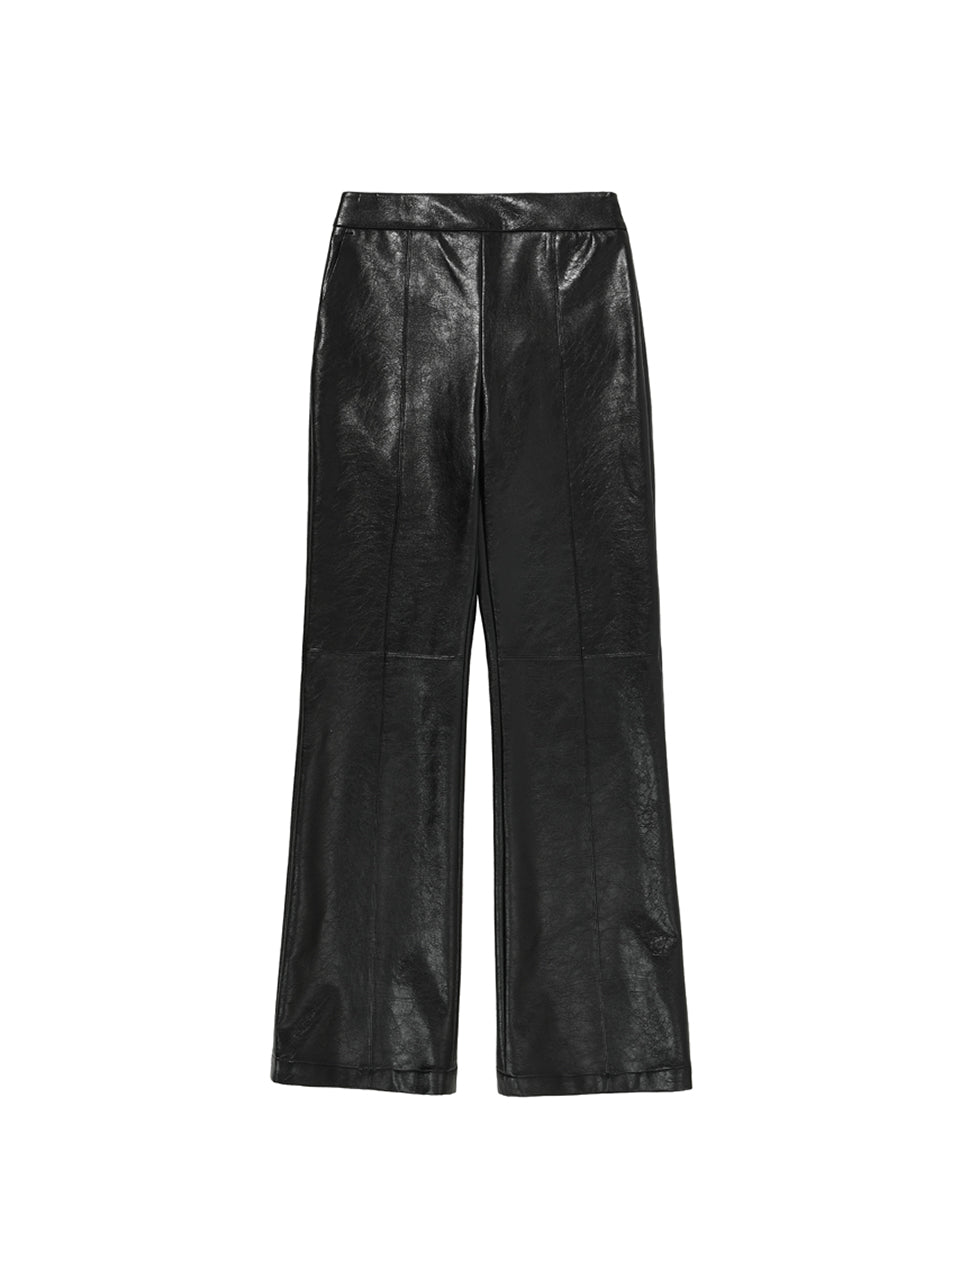 Vegan leather bootcut pants